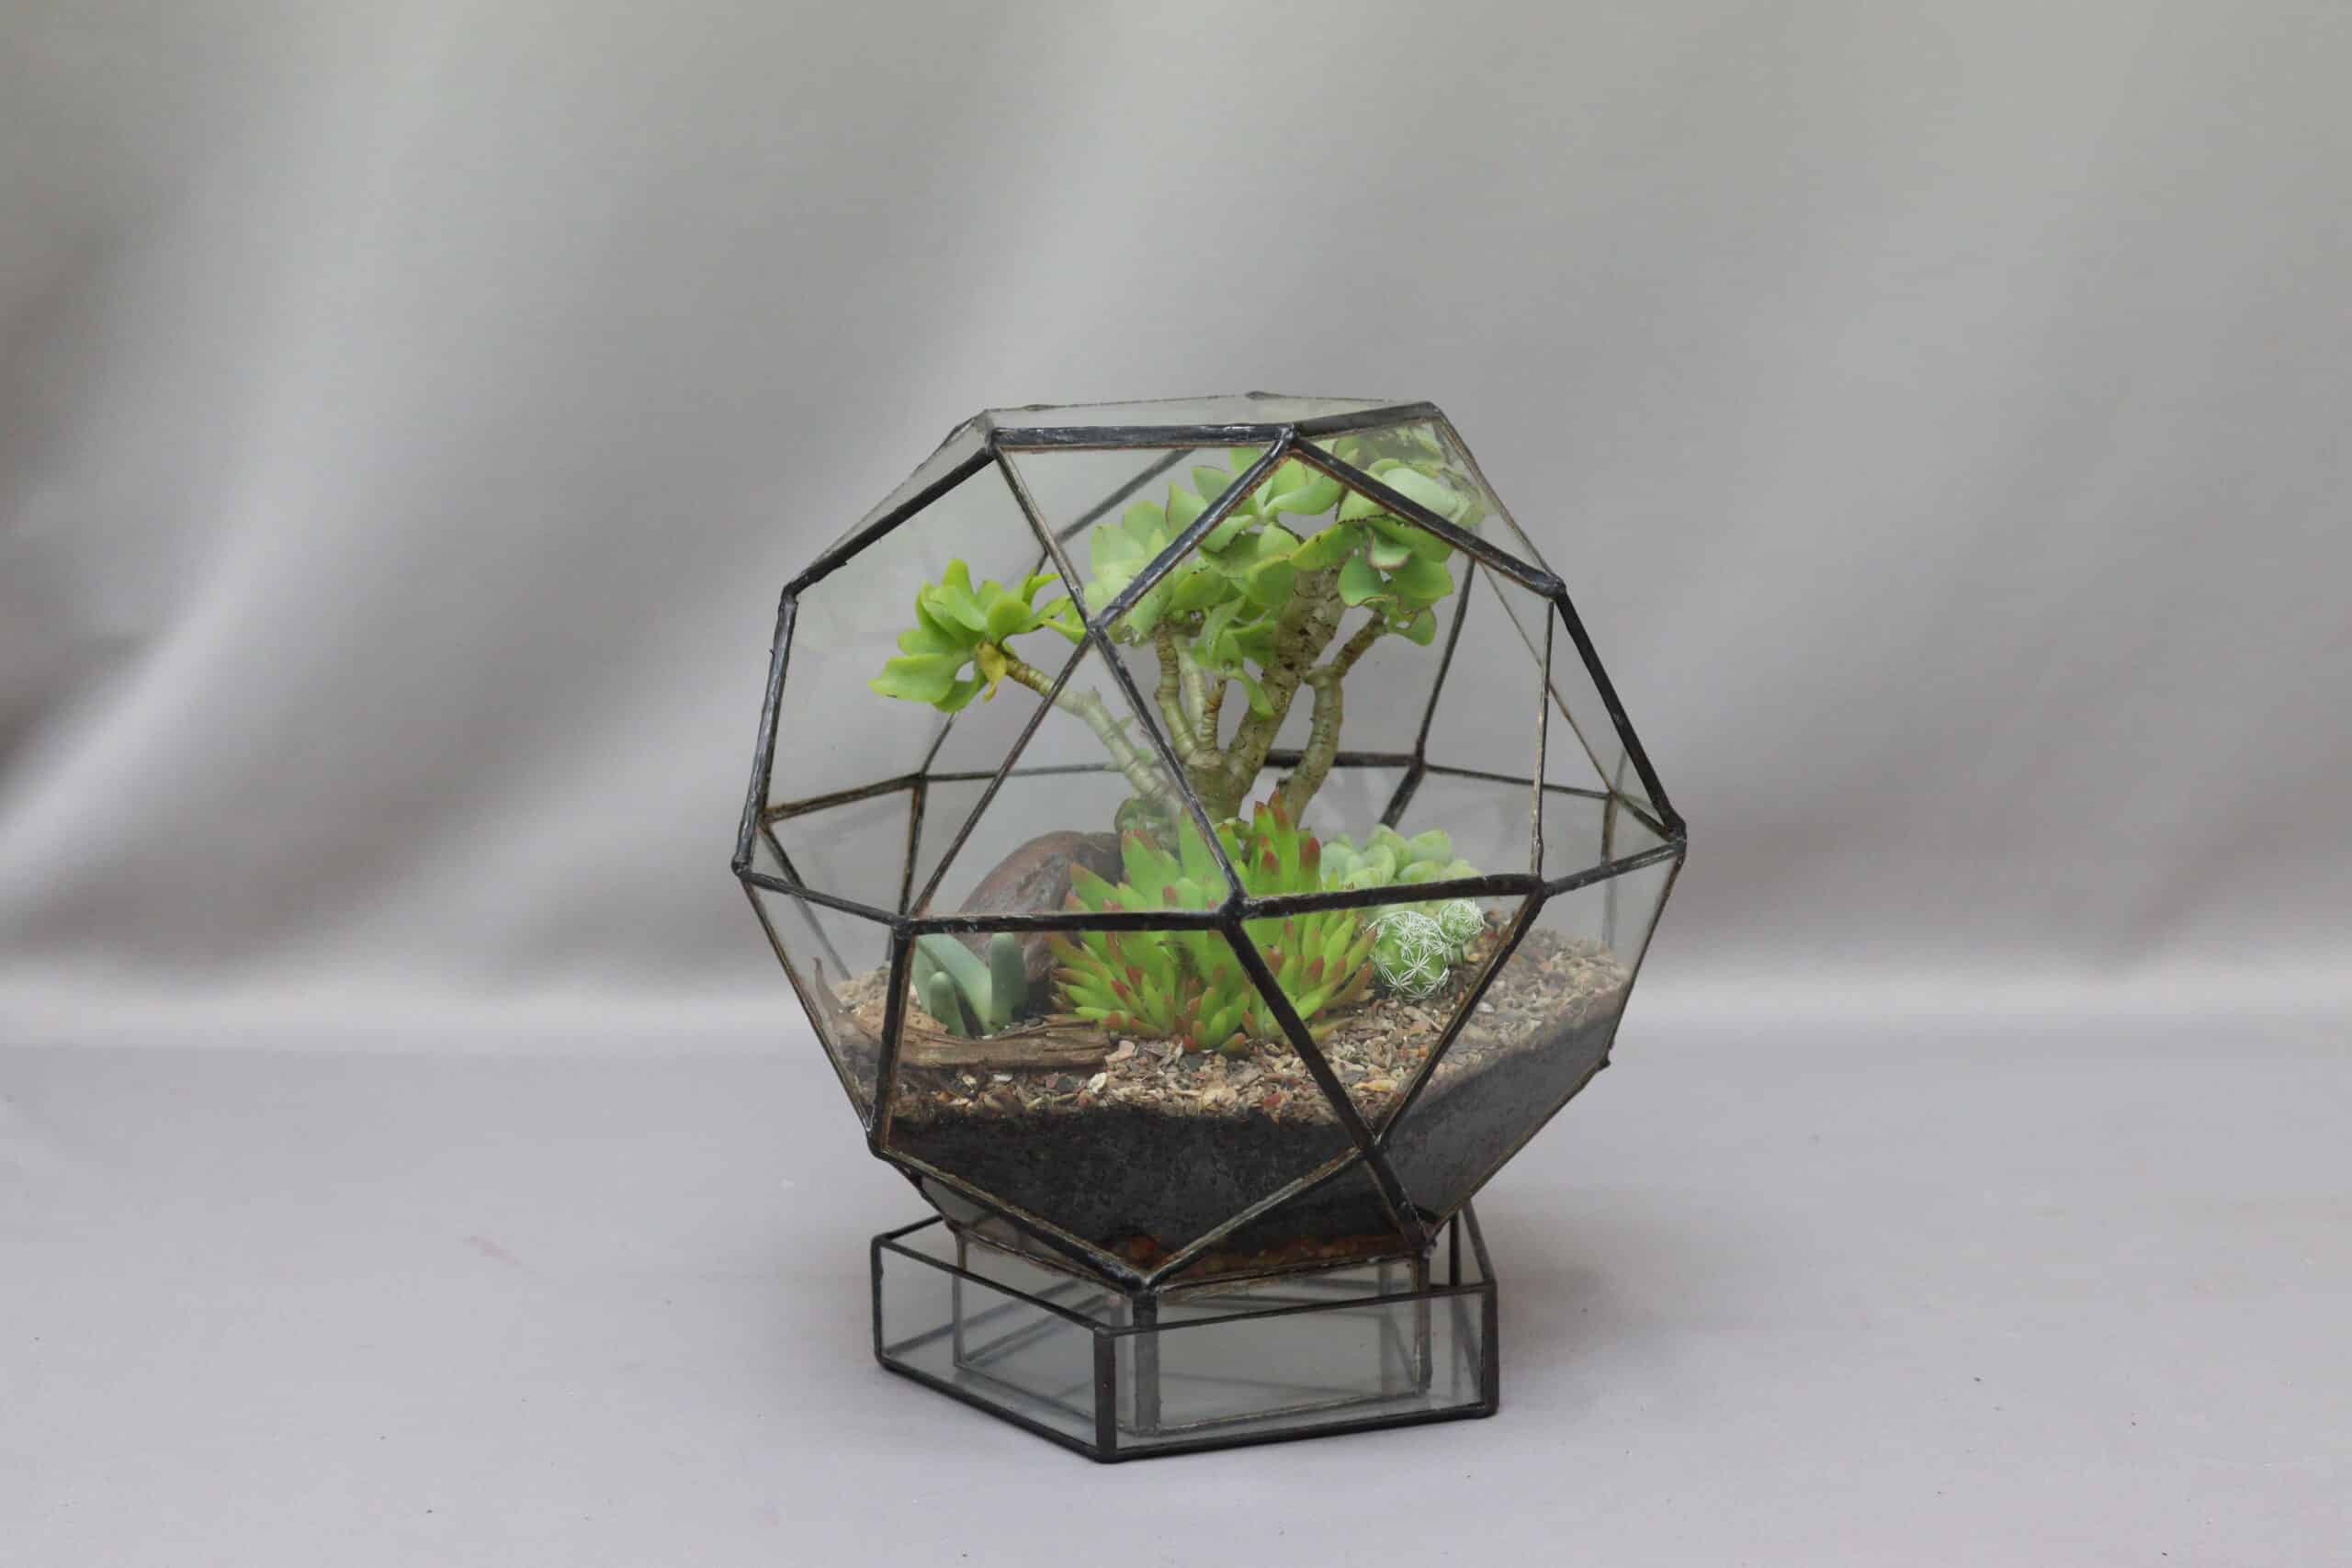 A medium geometric-inspired glass terrarium planter with an assortment of succulents inside, against a plain grey background.